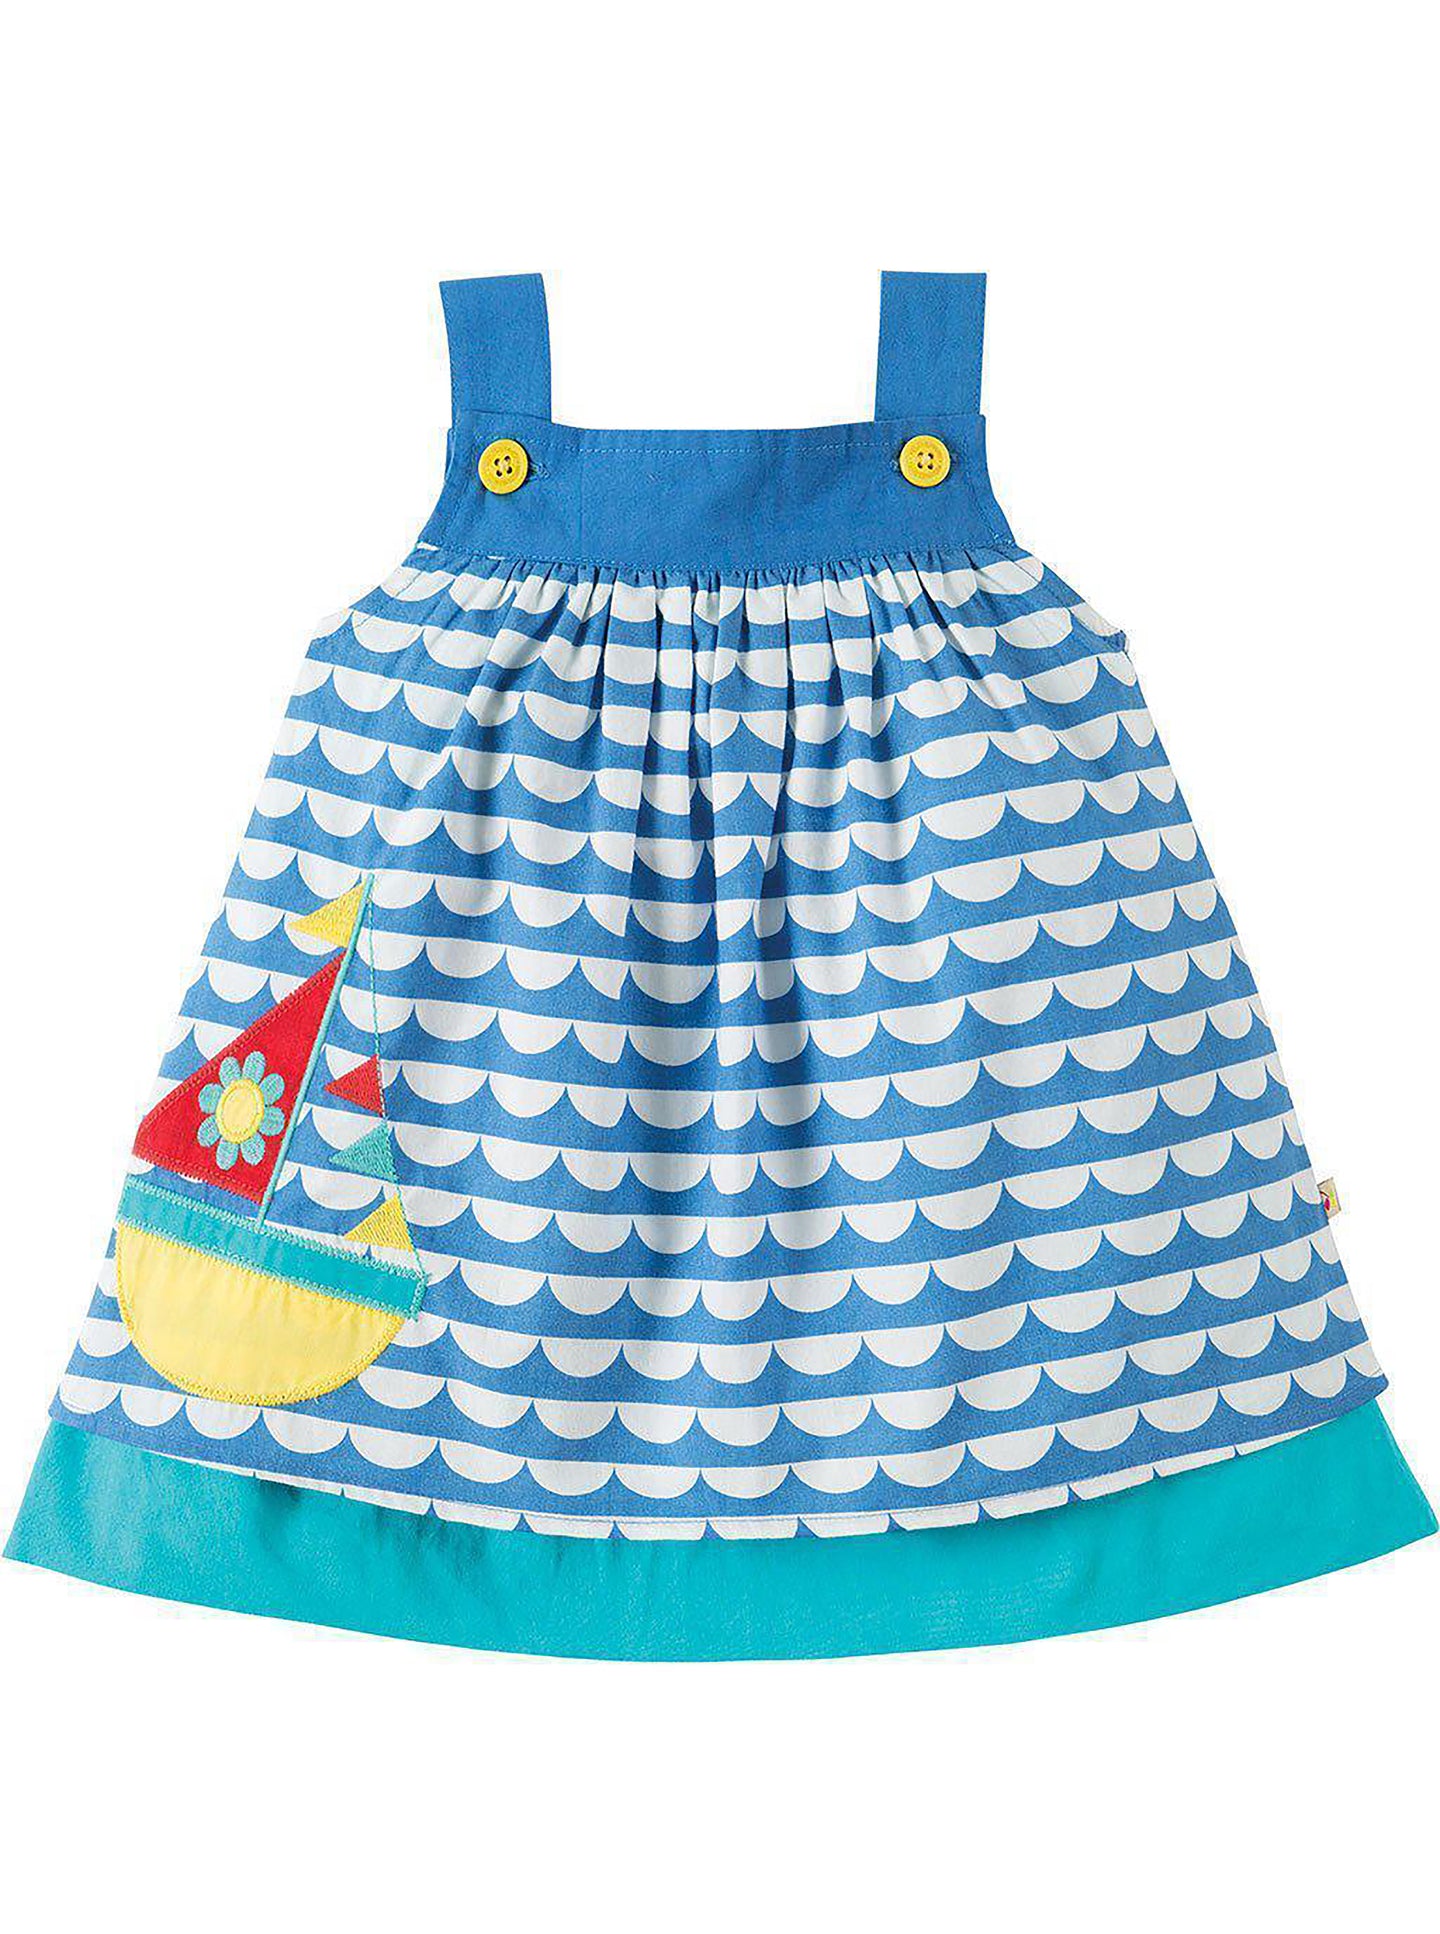 [12-18m] Frugi Organic Baby Mylor Border Boat Dress, Blue